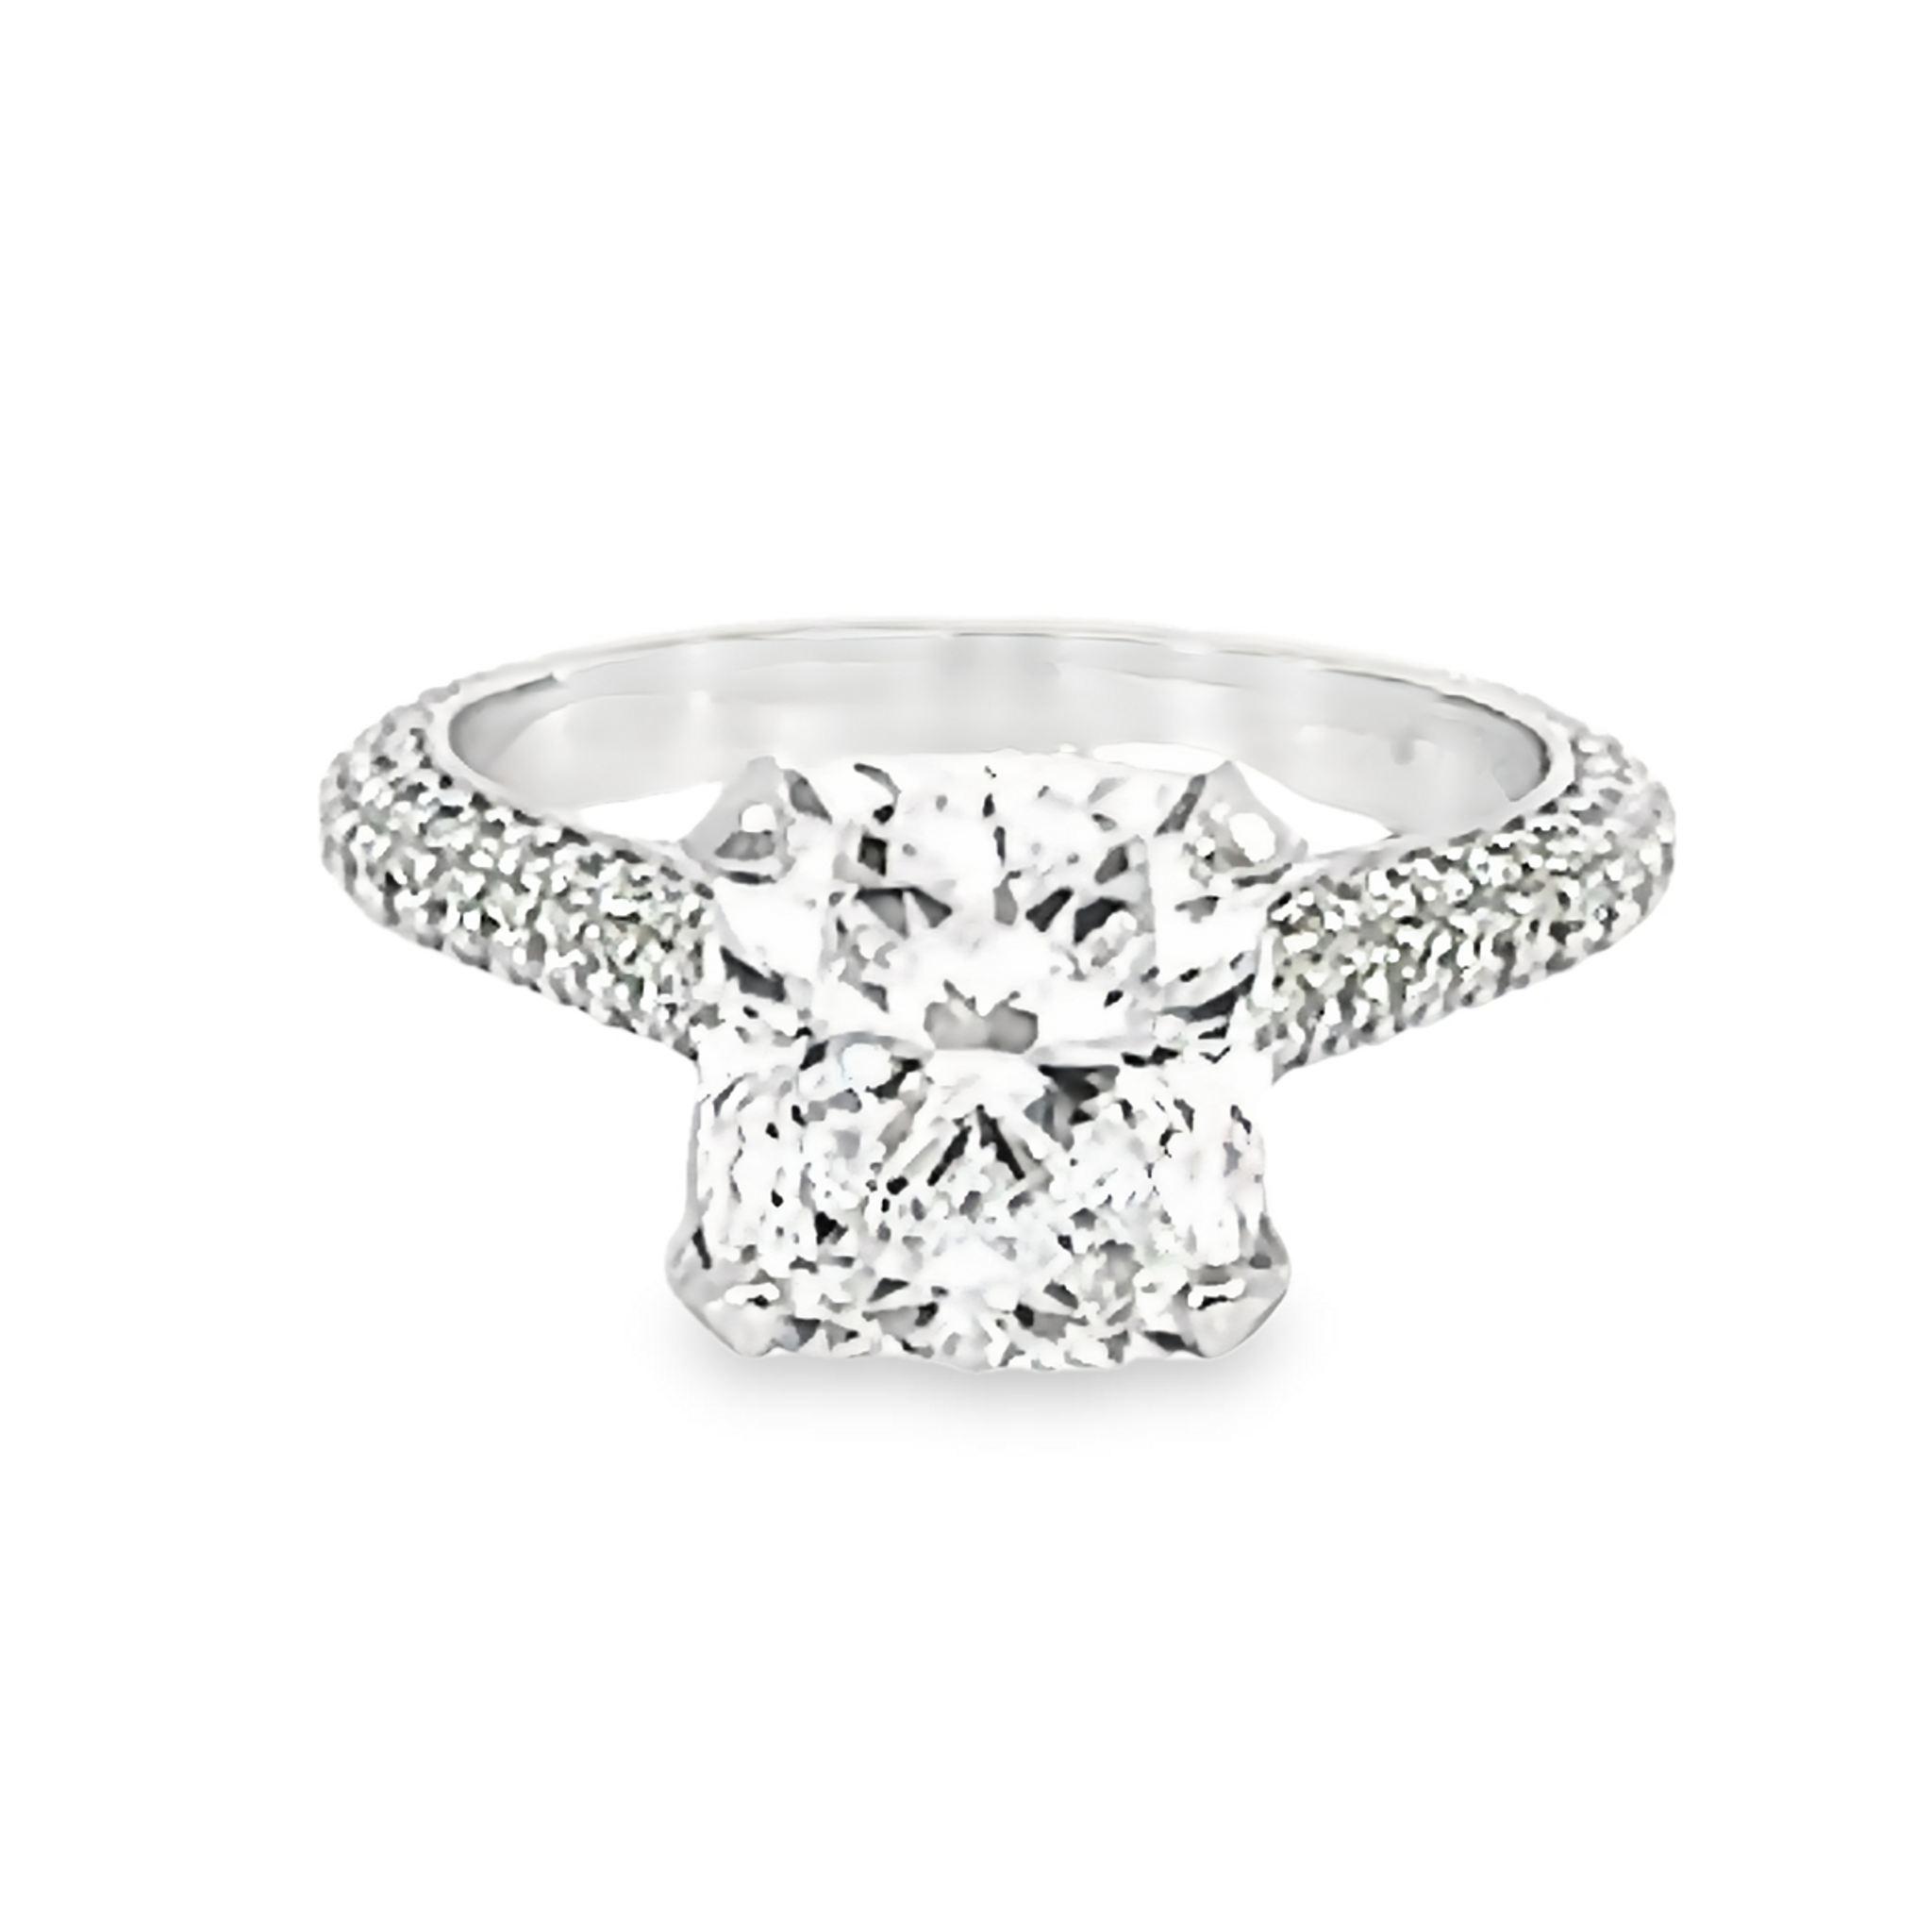 White Gold Cushion Cut Diamond Engagement Ring